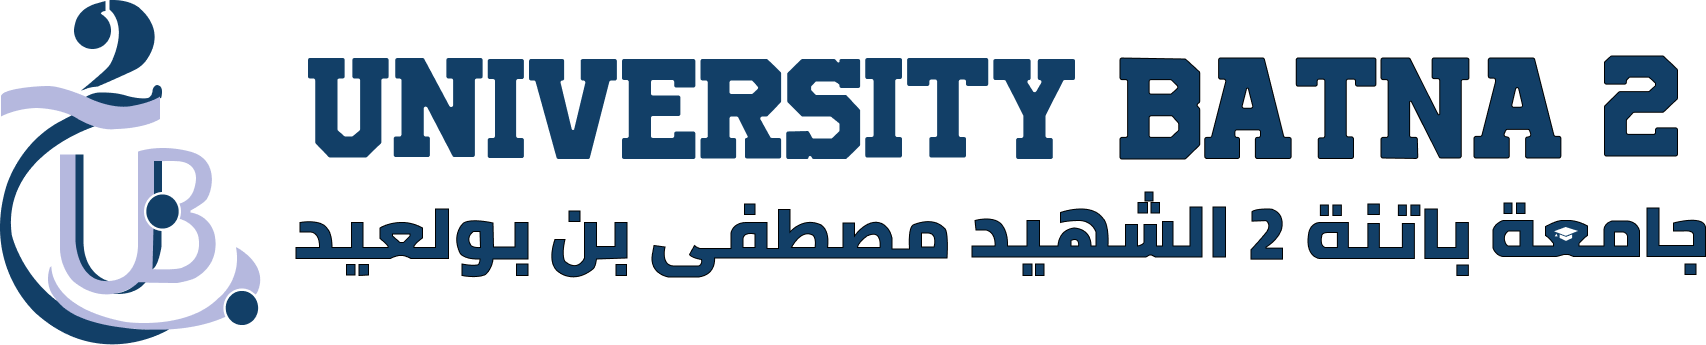 University of Batna 2 logo